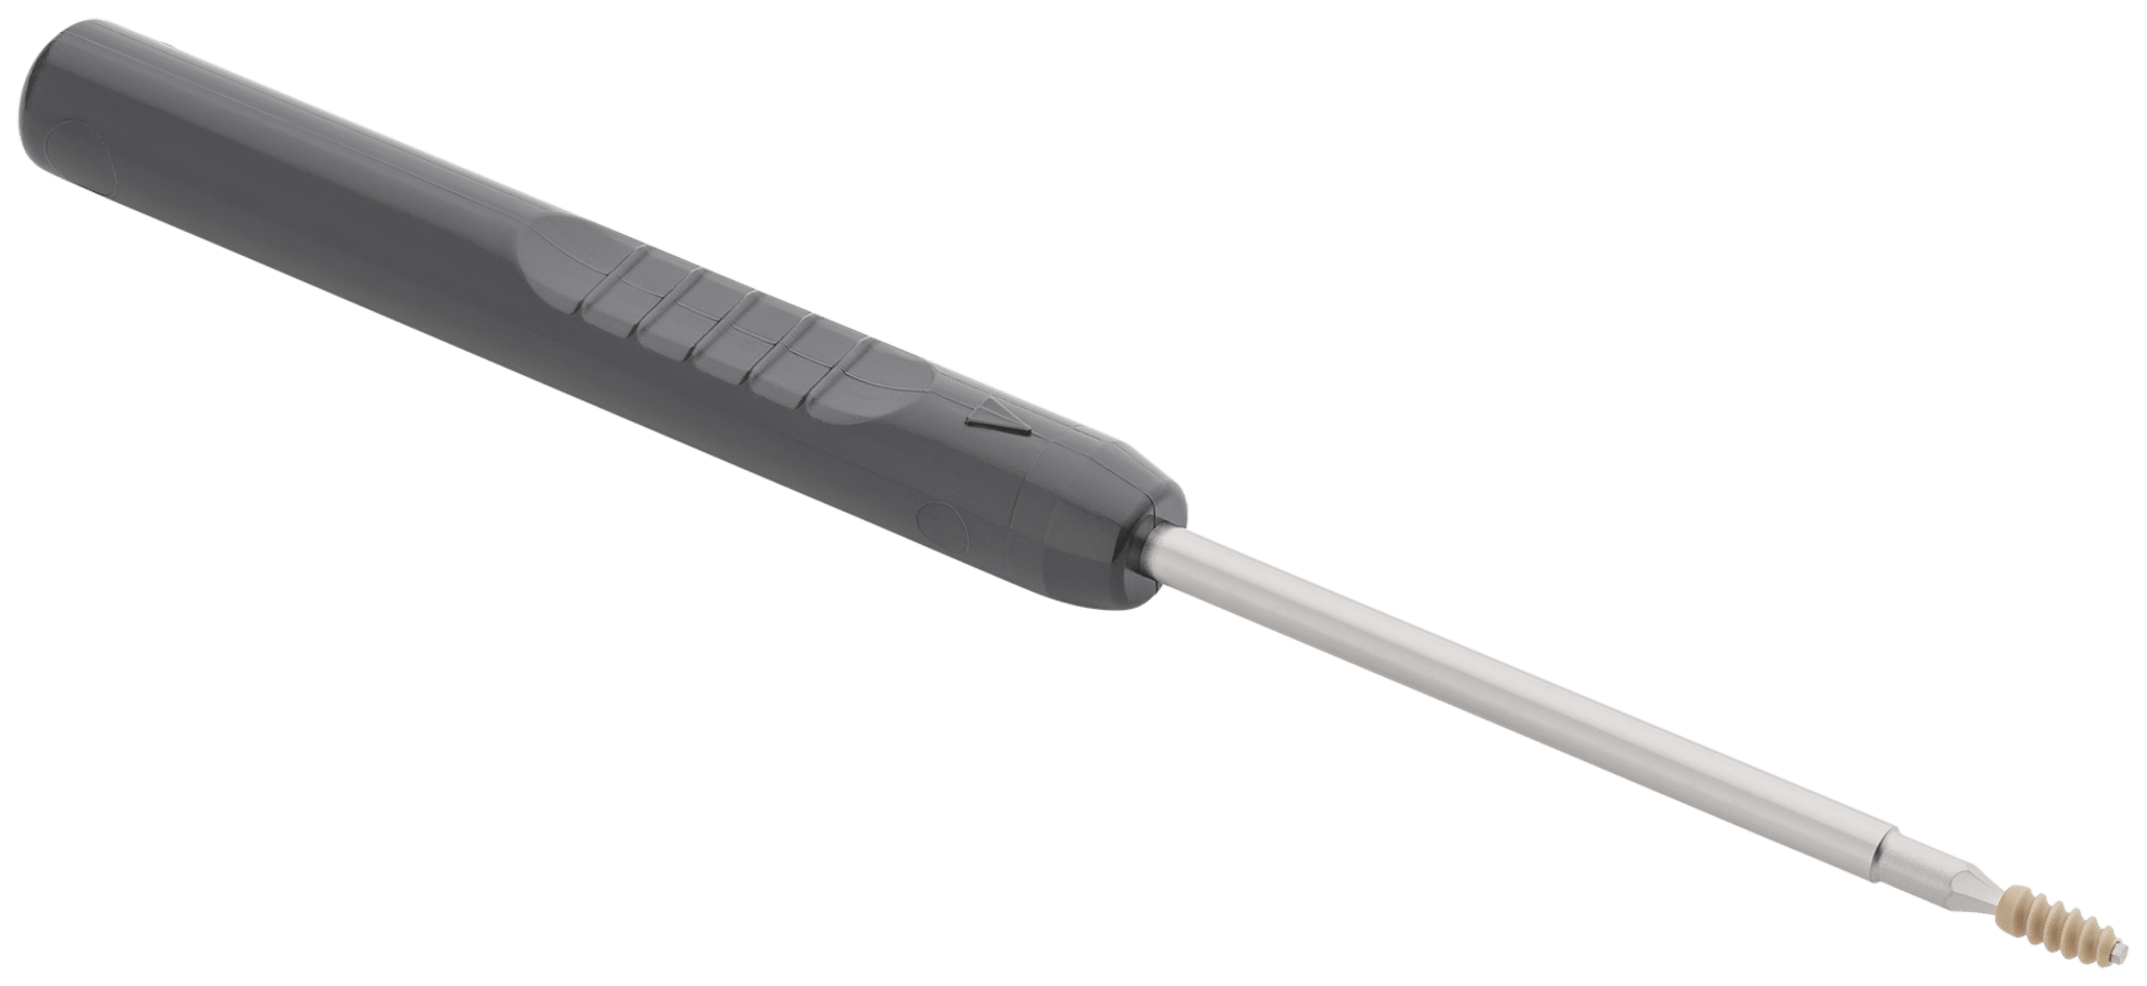 Tenodesis Screw, PEEK, With Handled Inserter, 2.5 x 6 mm